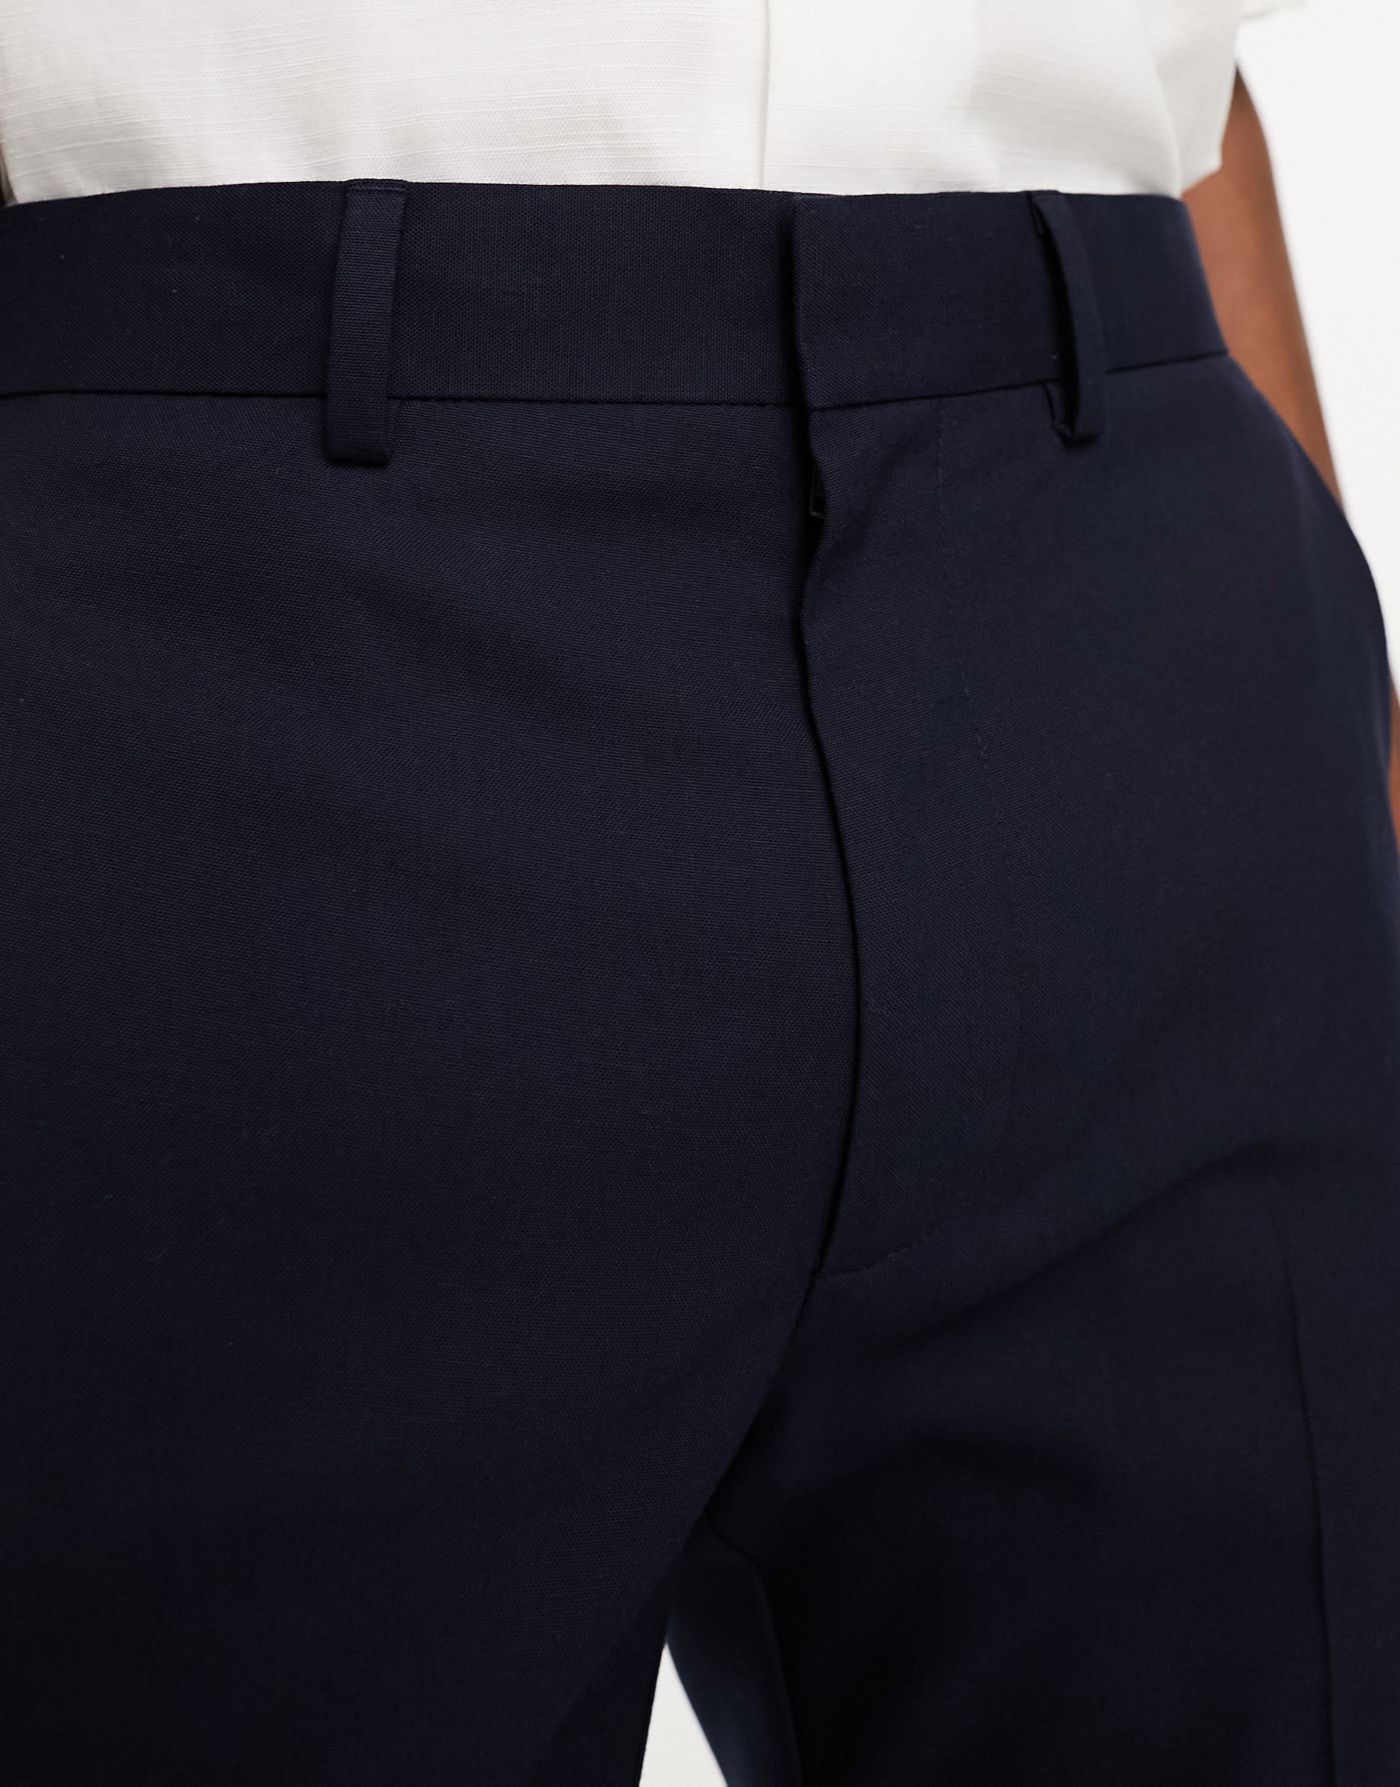 ASOS DESIGN slim smart trousers in navy